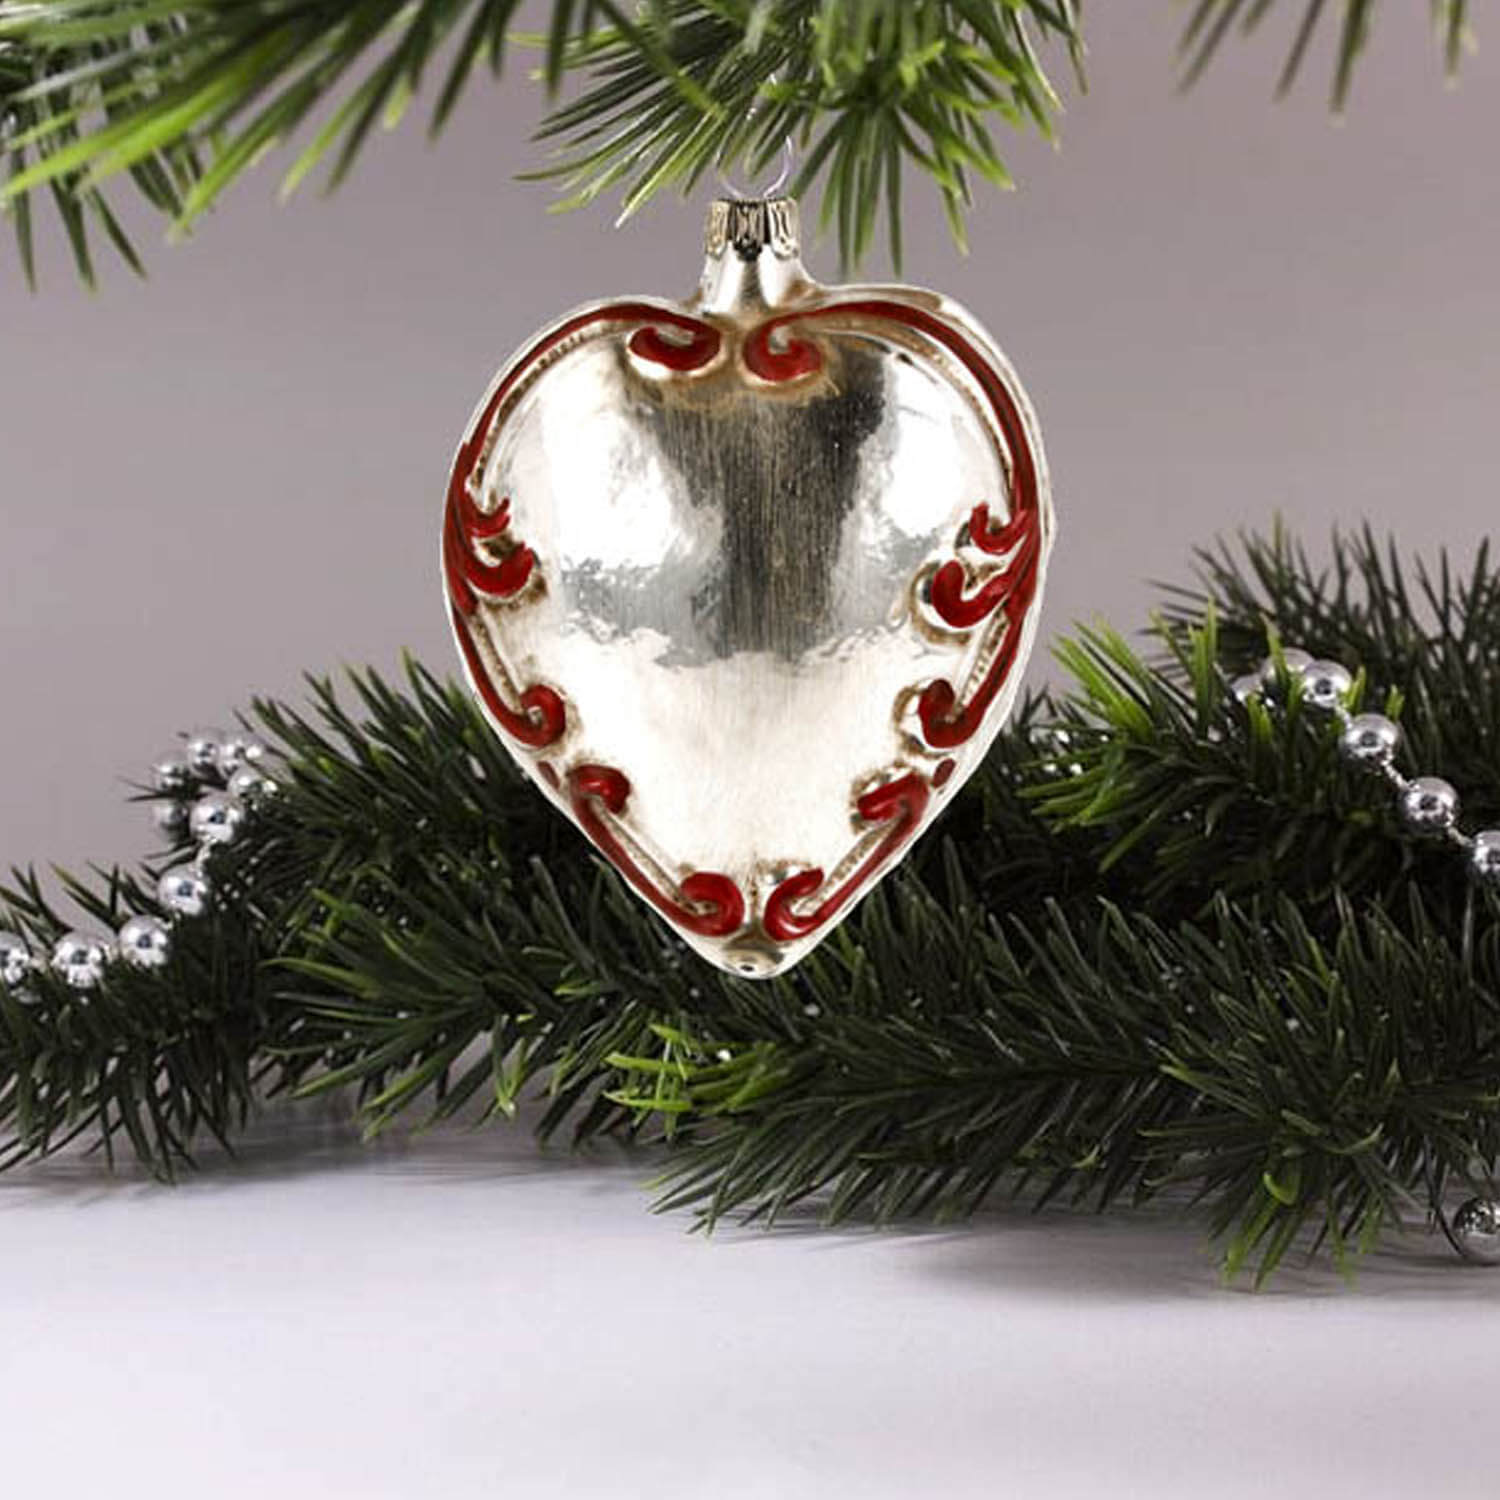 MAROLIN® - Glass ornament "Heart with baroque ornaments"